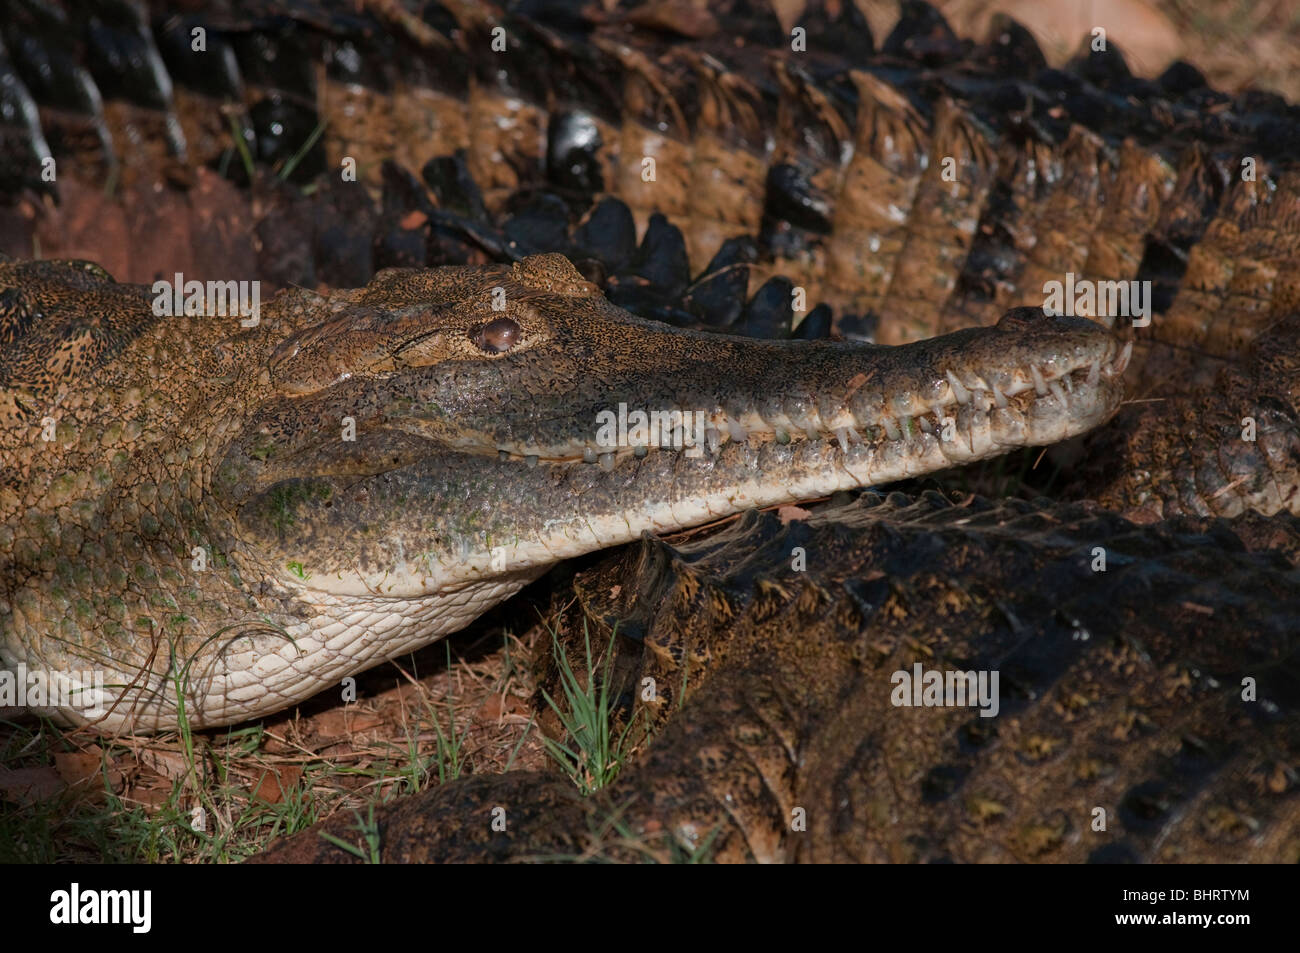 Australian fresh water crocodile (Crocodylus or Crocodylus johnstoni Photo -